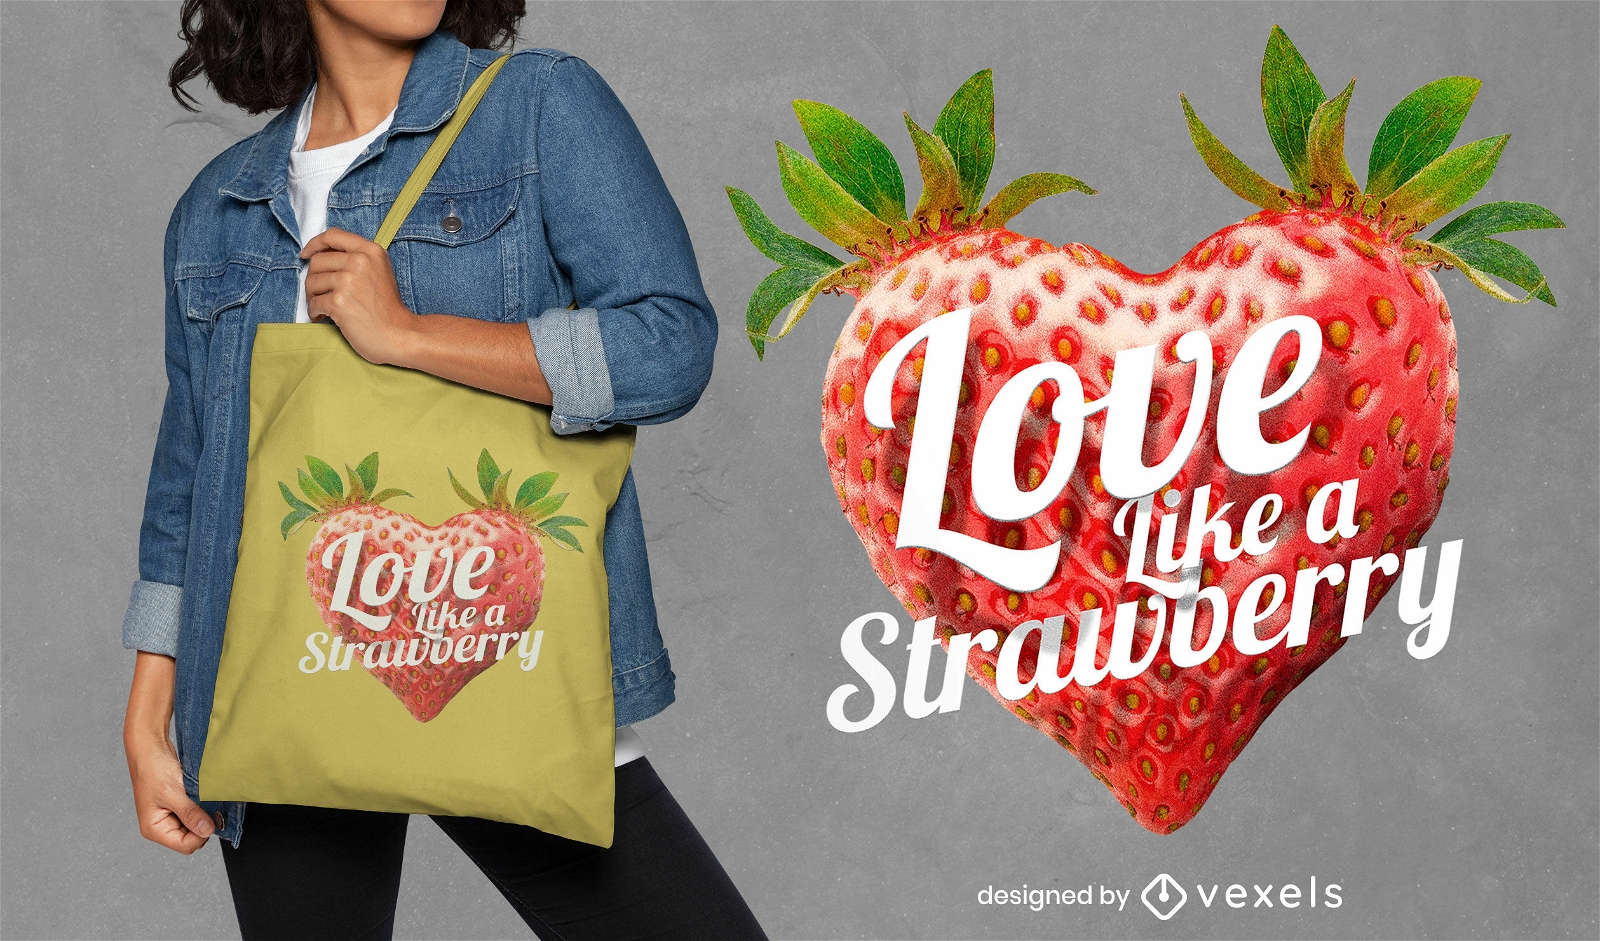 Strawberry heart surreal tote bag design